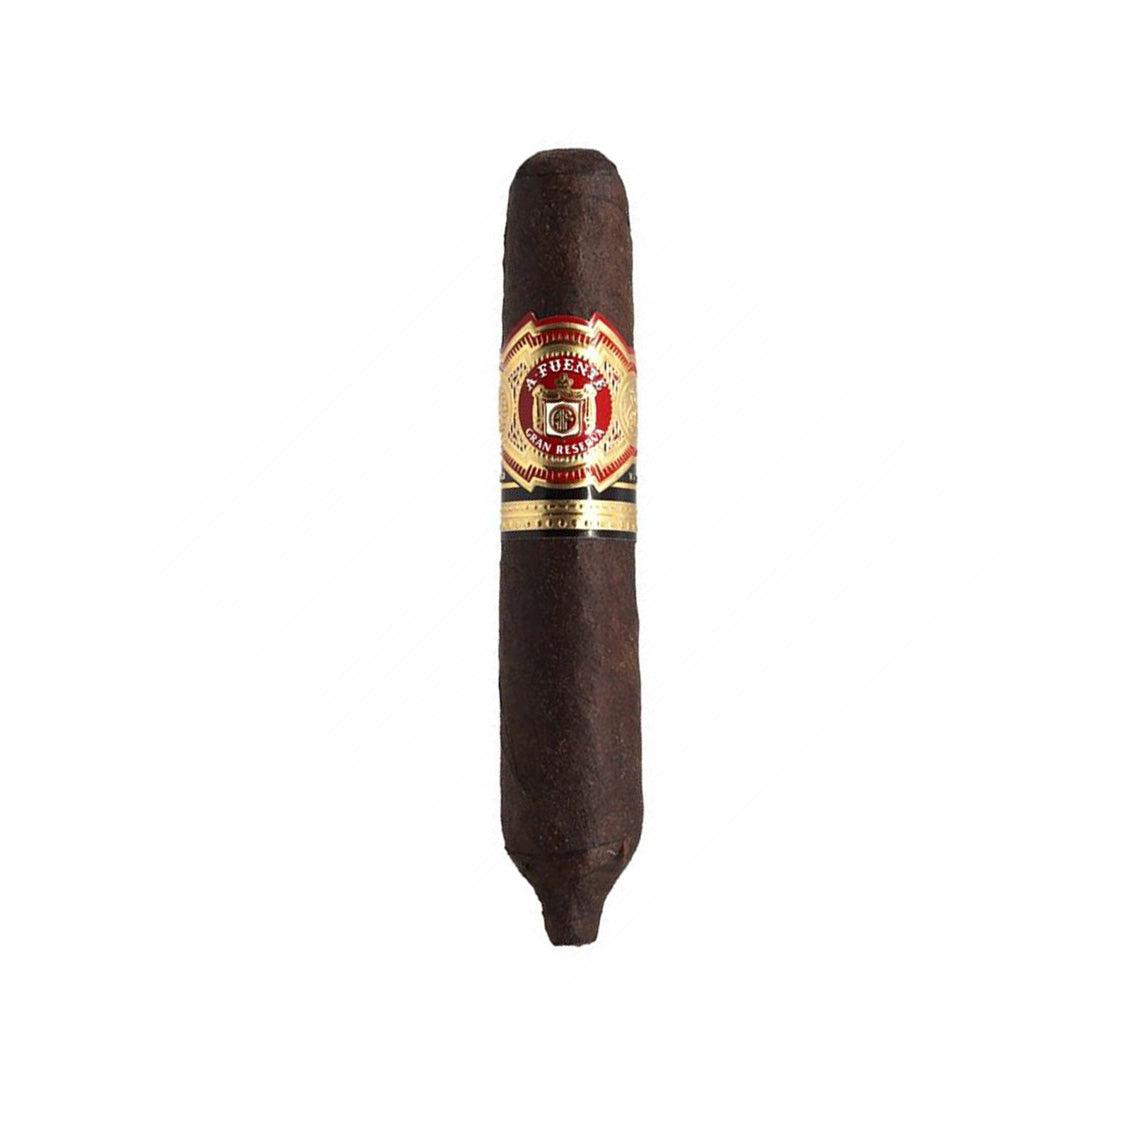 Arturo Fuente Hemingway Best Seller Maduro Cigars